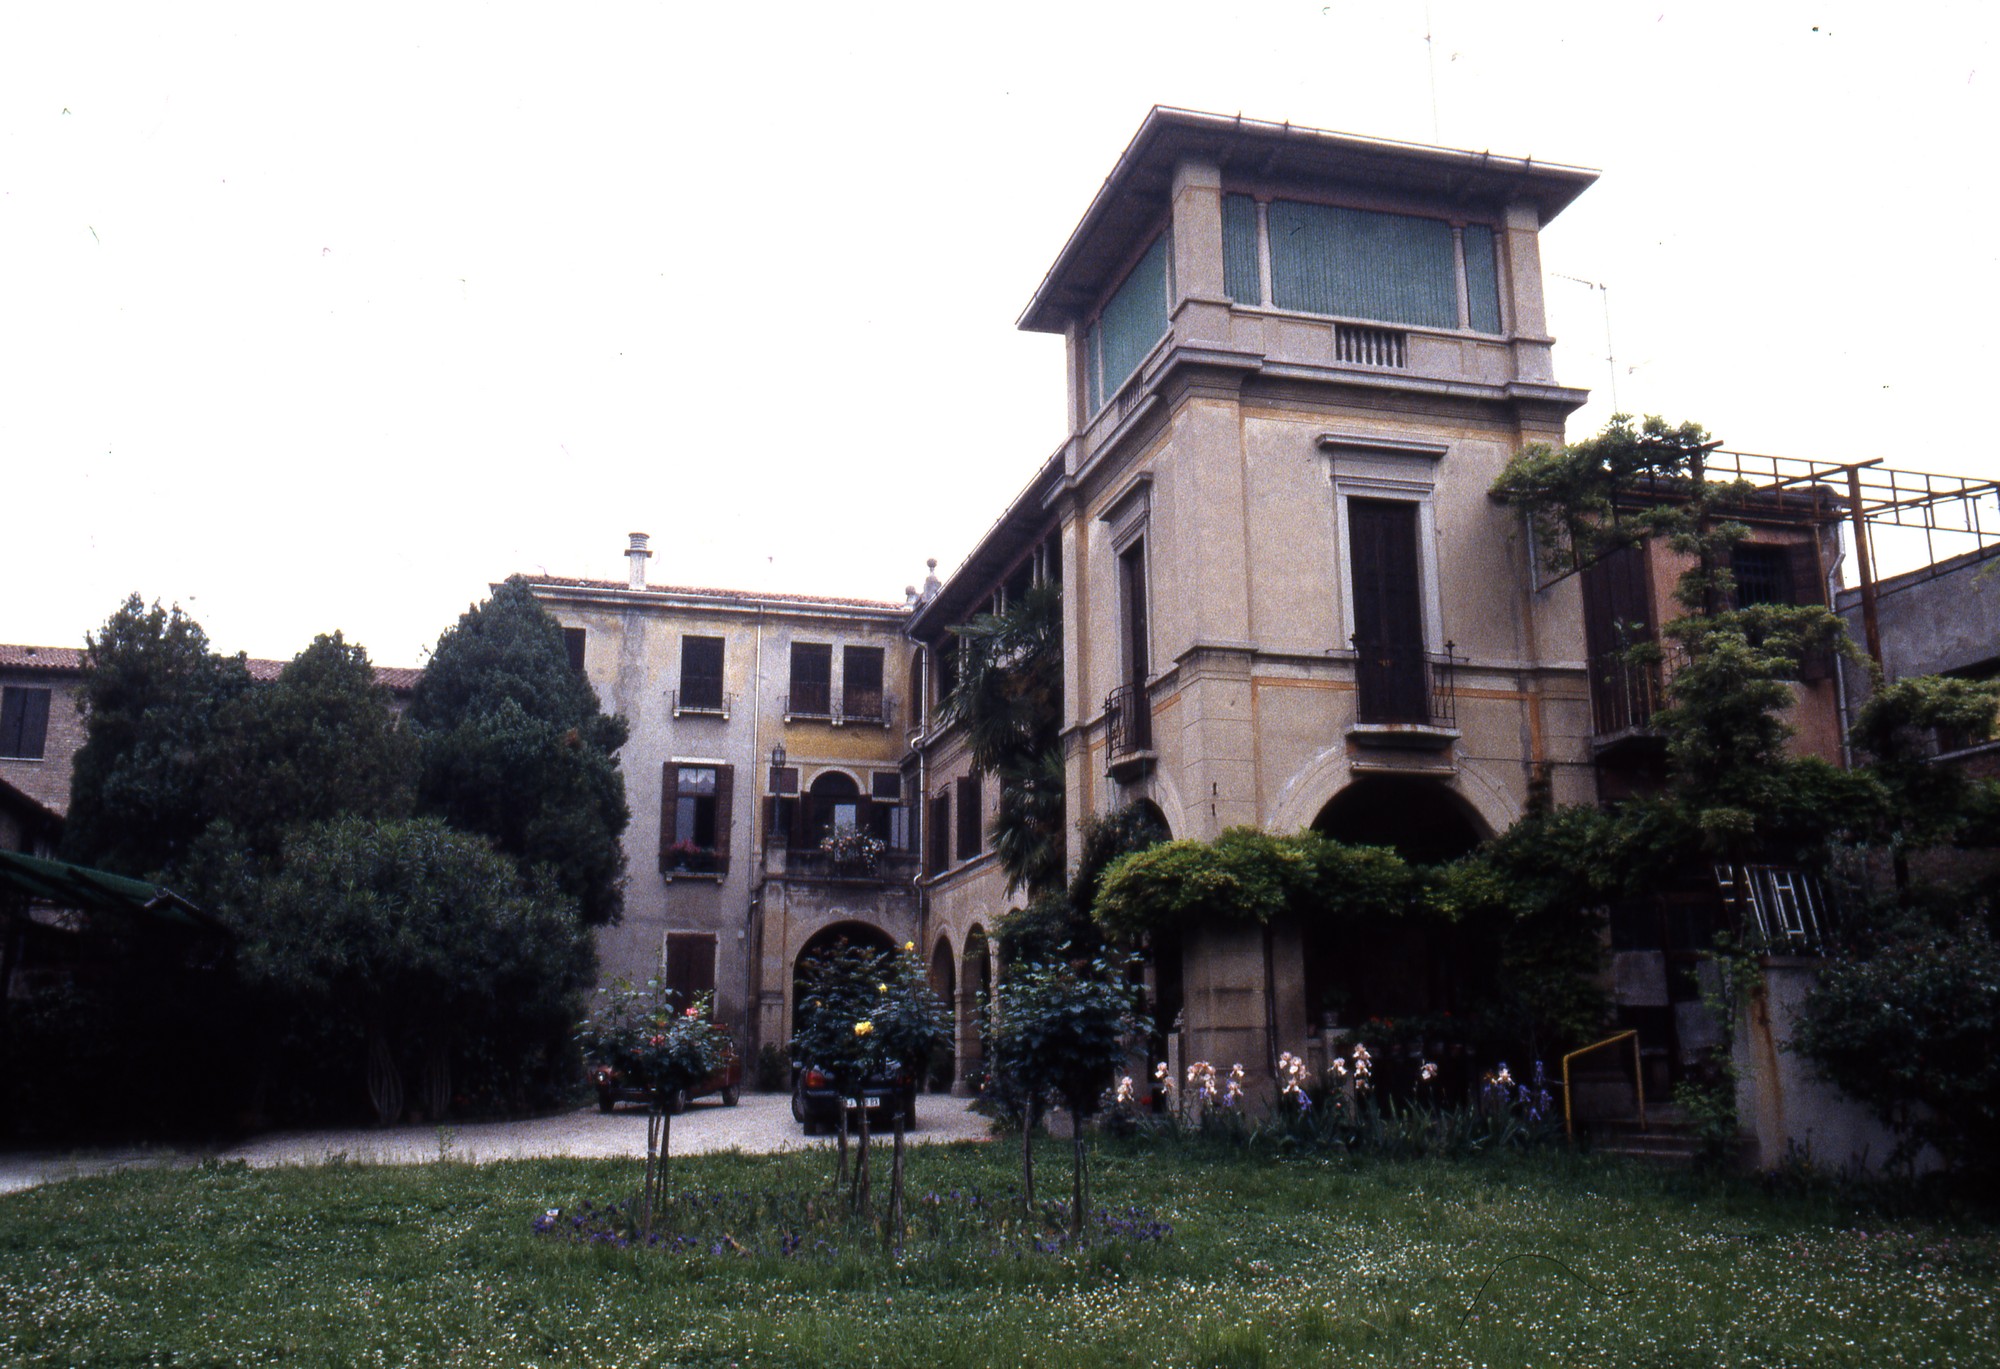 Fracanzani (giardino, privato), Sografi, San Bonifacio - Padova (PD) 